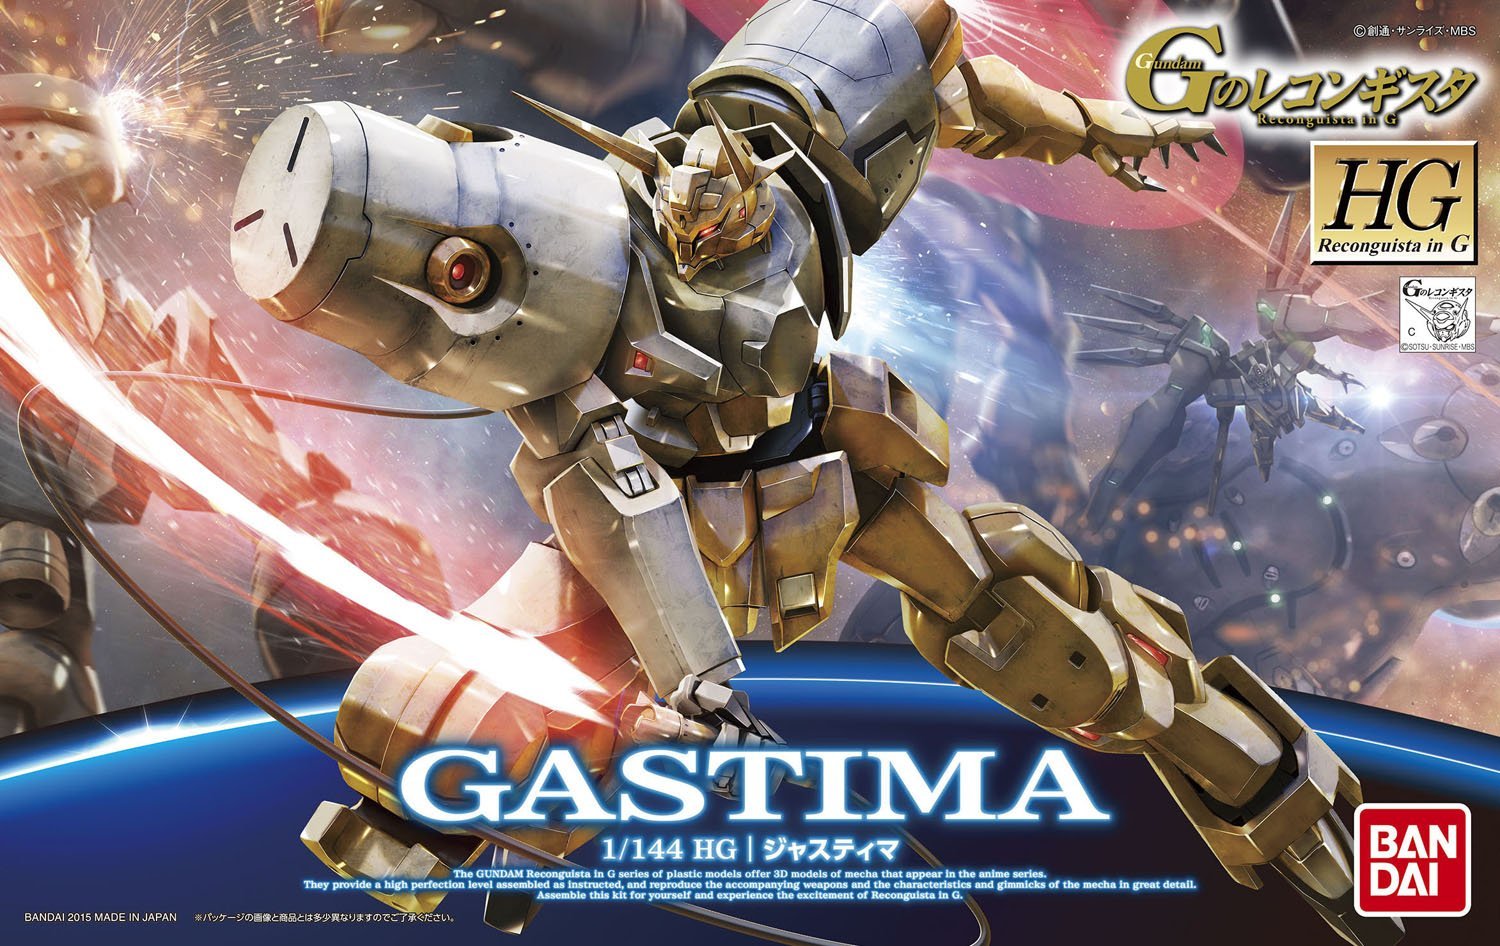 Gundam 1/144 HG Reconguista G #15 Gastima Model Kit